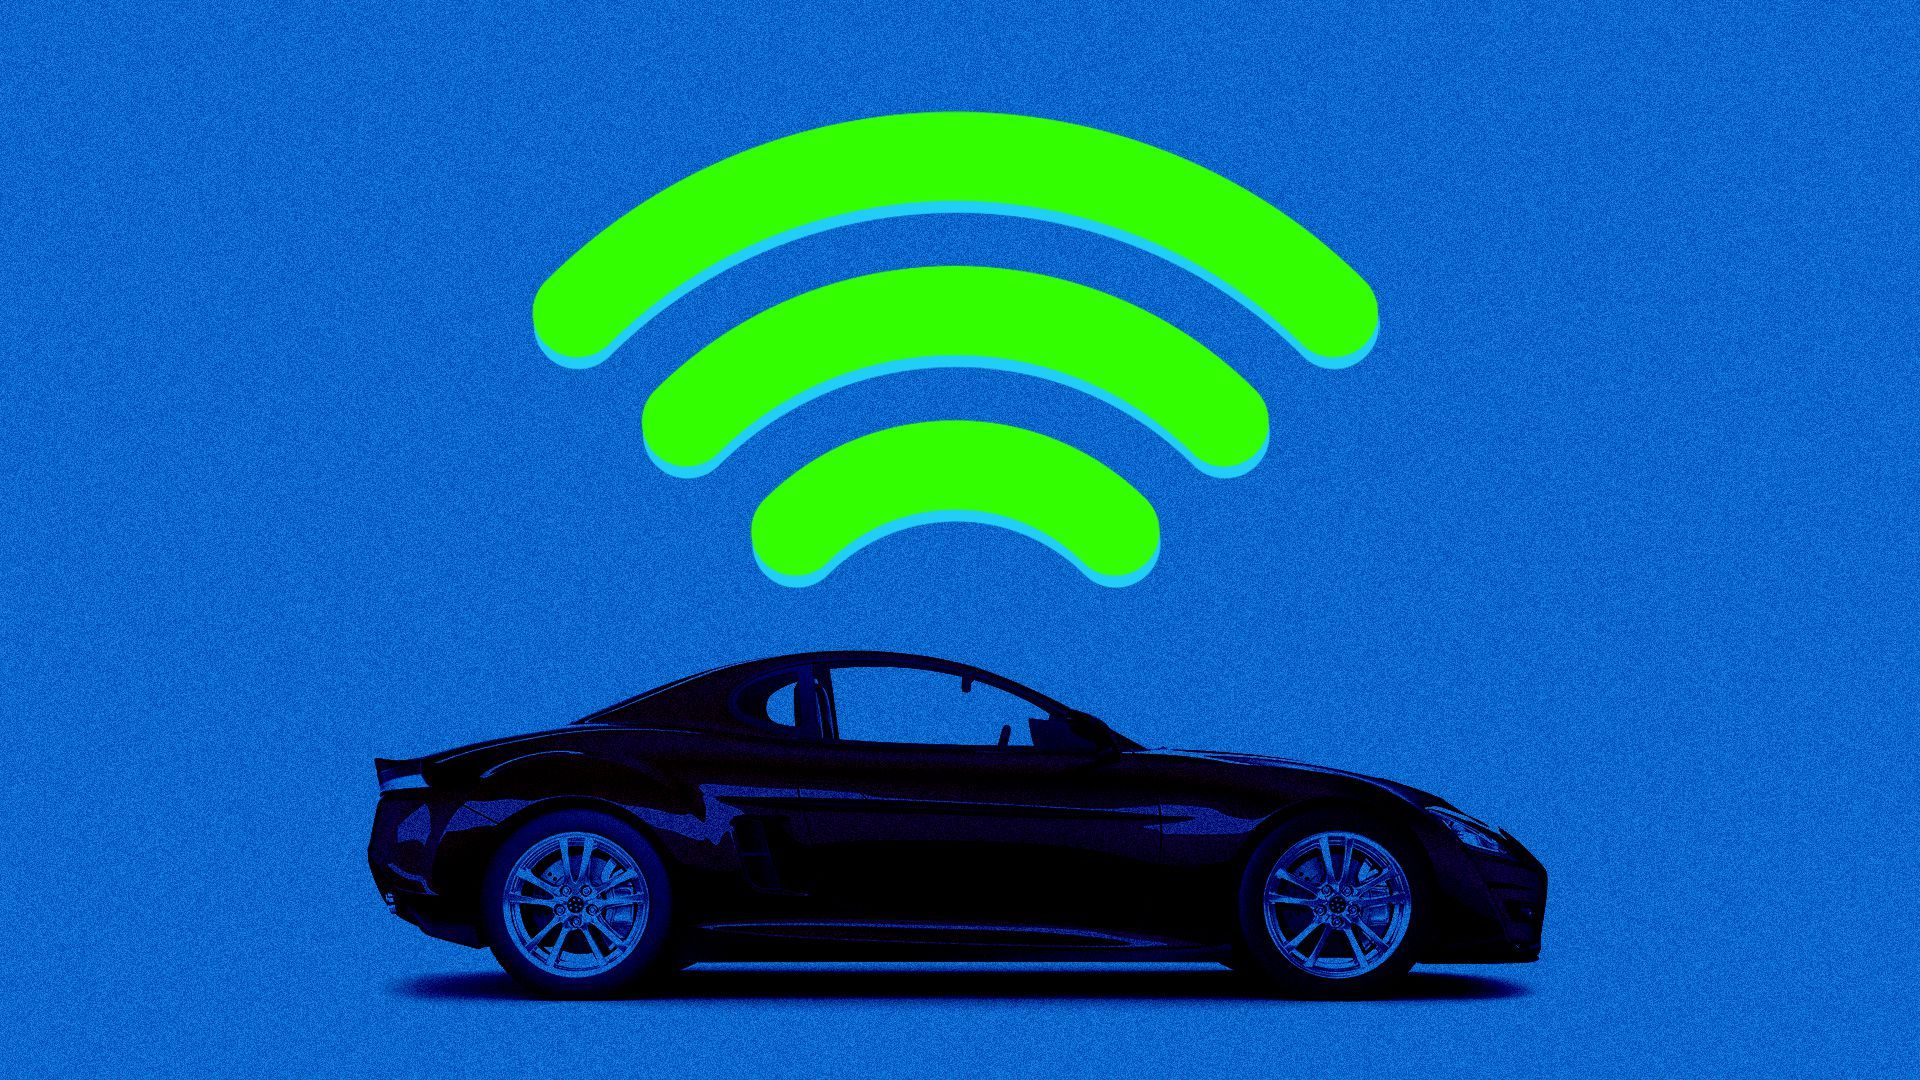 Illustration of a car under a wifi symbol